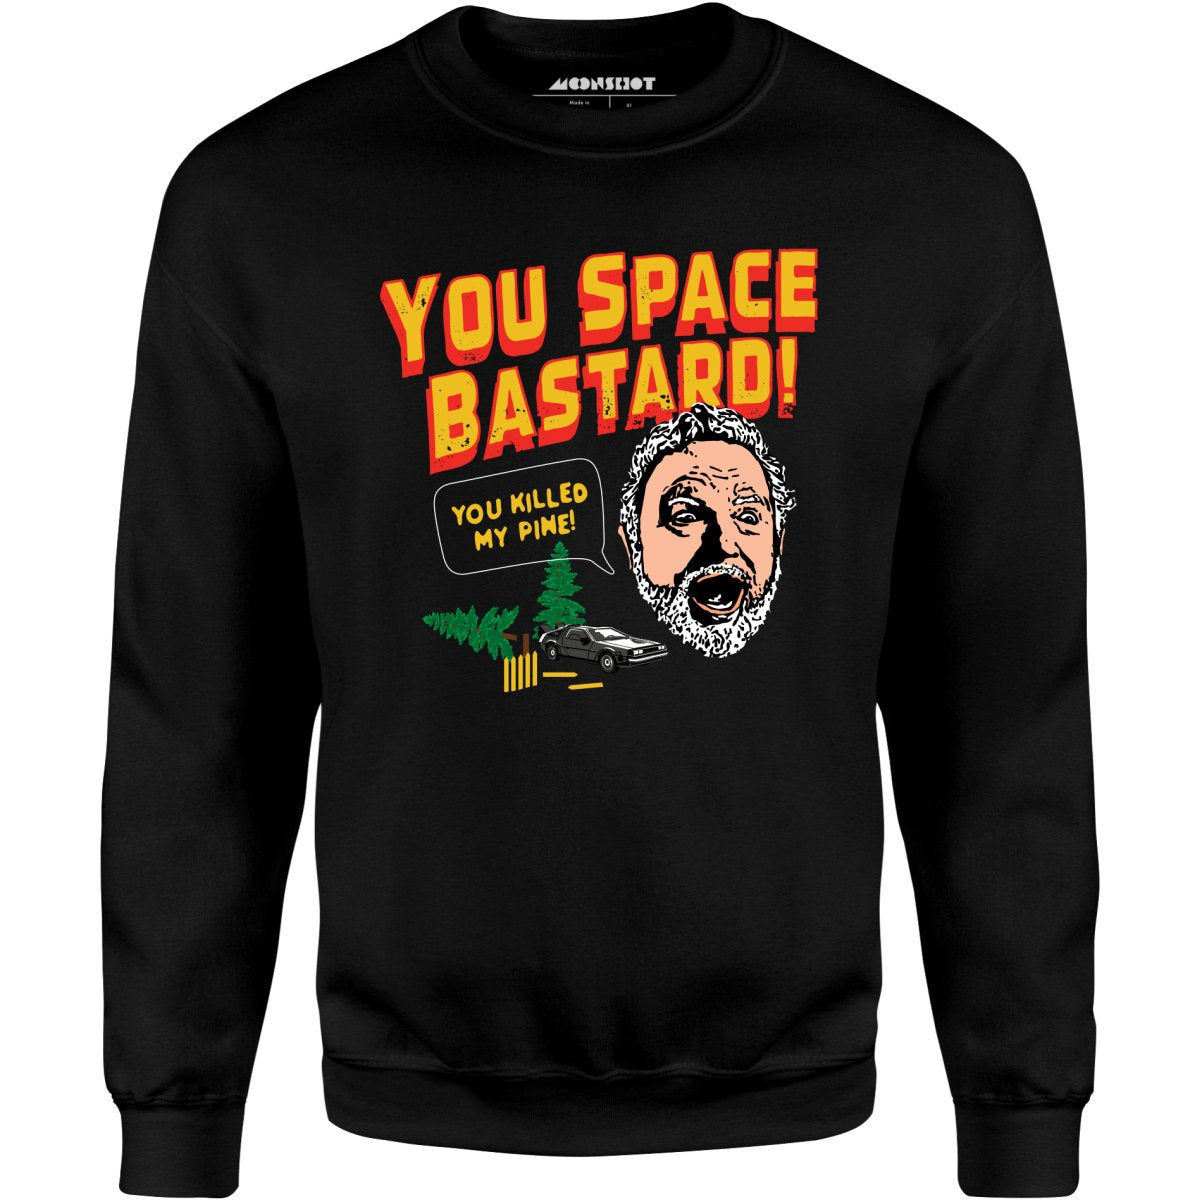 You Space Bastard! You Killed My Pine! - Unisex Sweatshirt